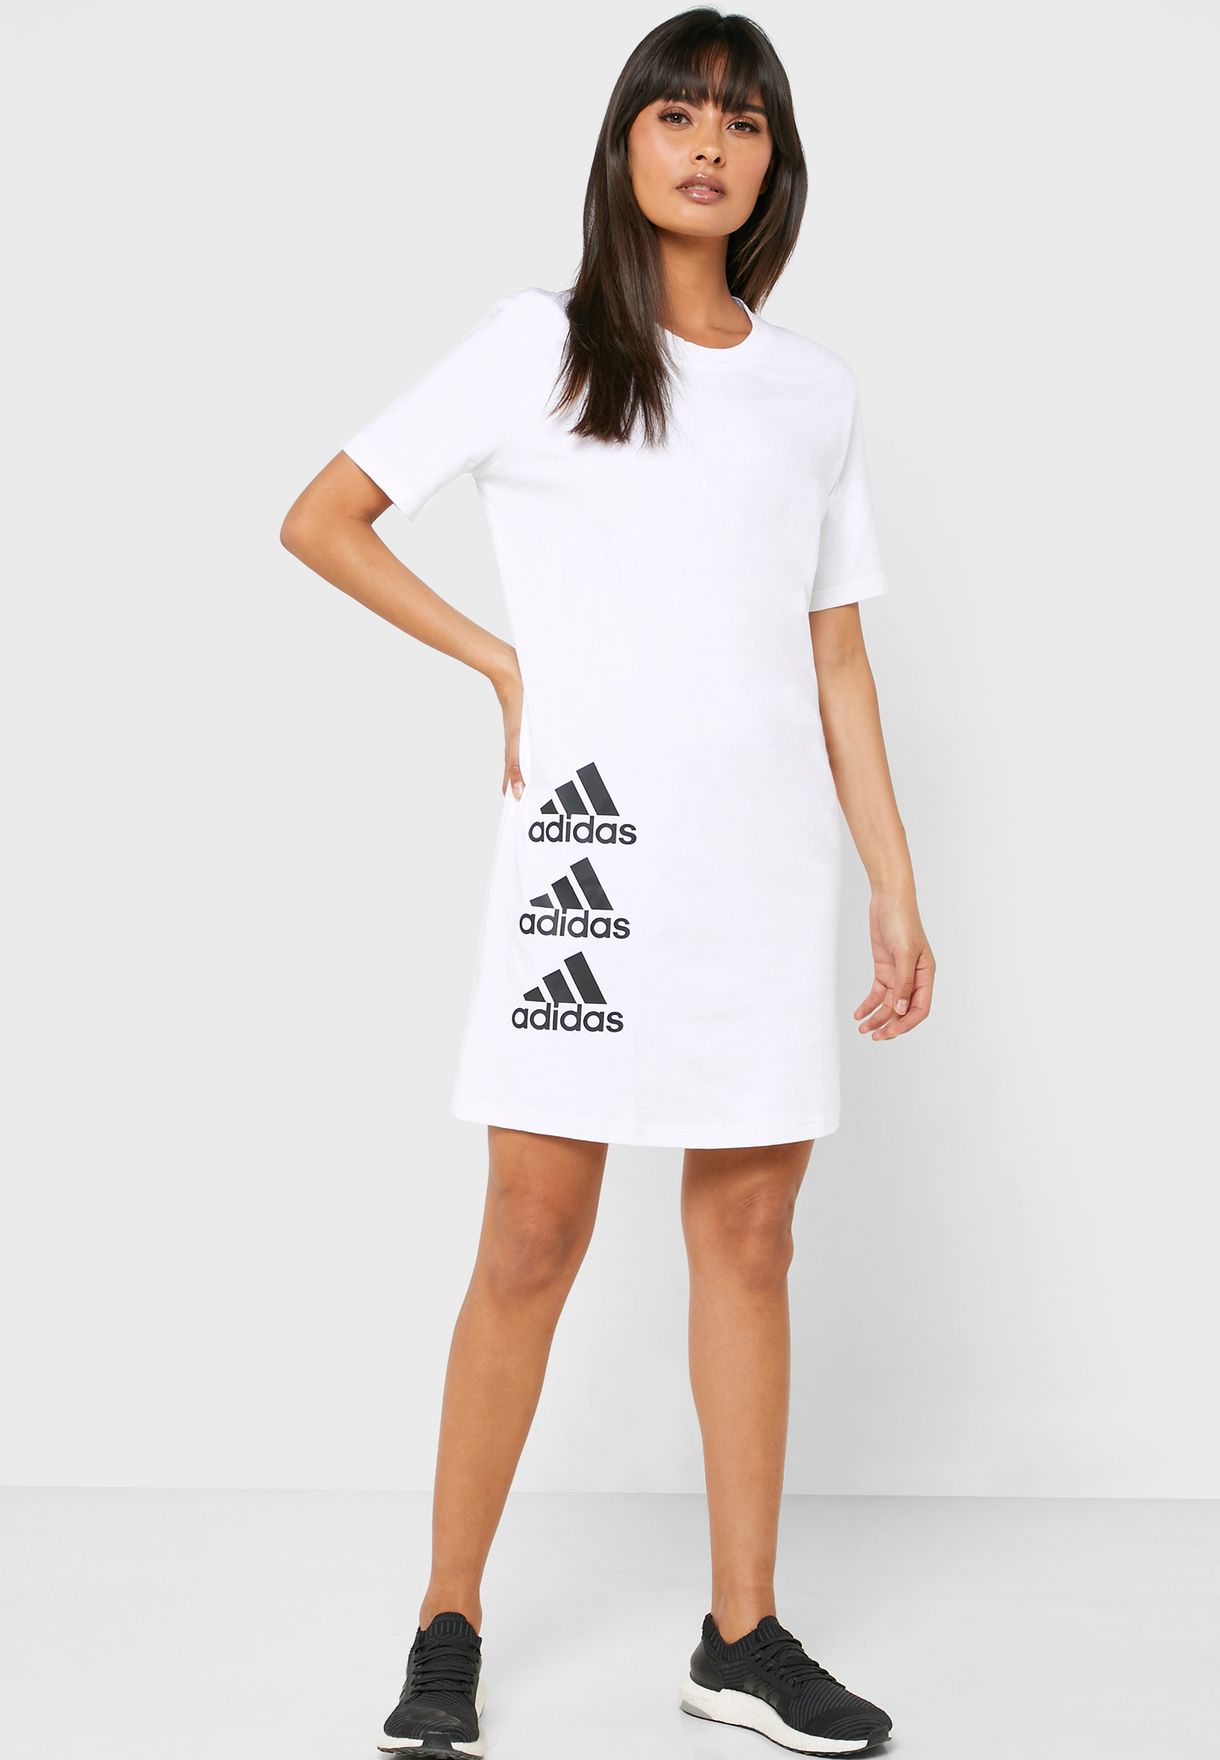 adidas white dress